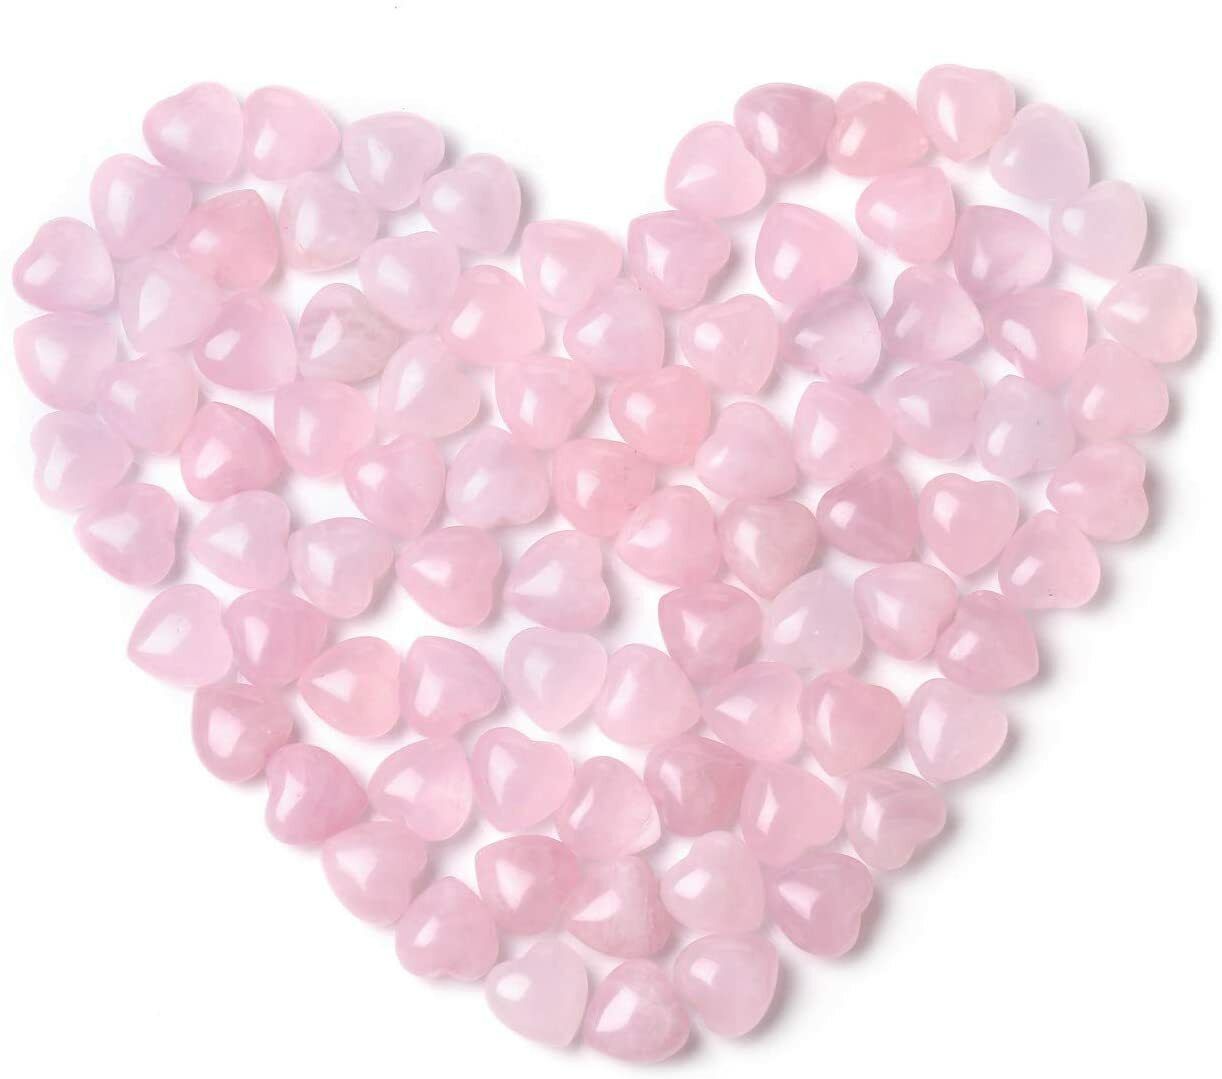 Healing Crystal Pocket Heart Natural Rose Quartz Love Puff Heart Carved Shape 20